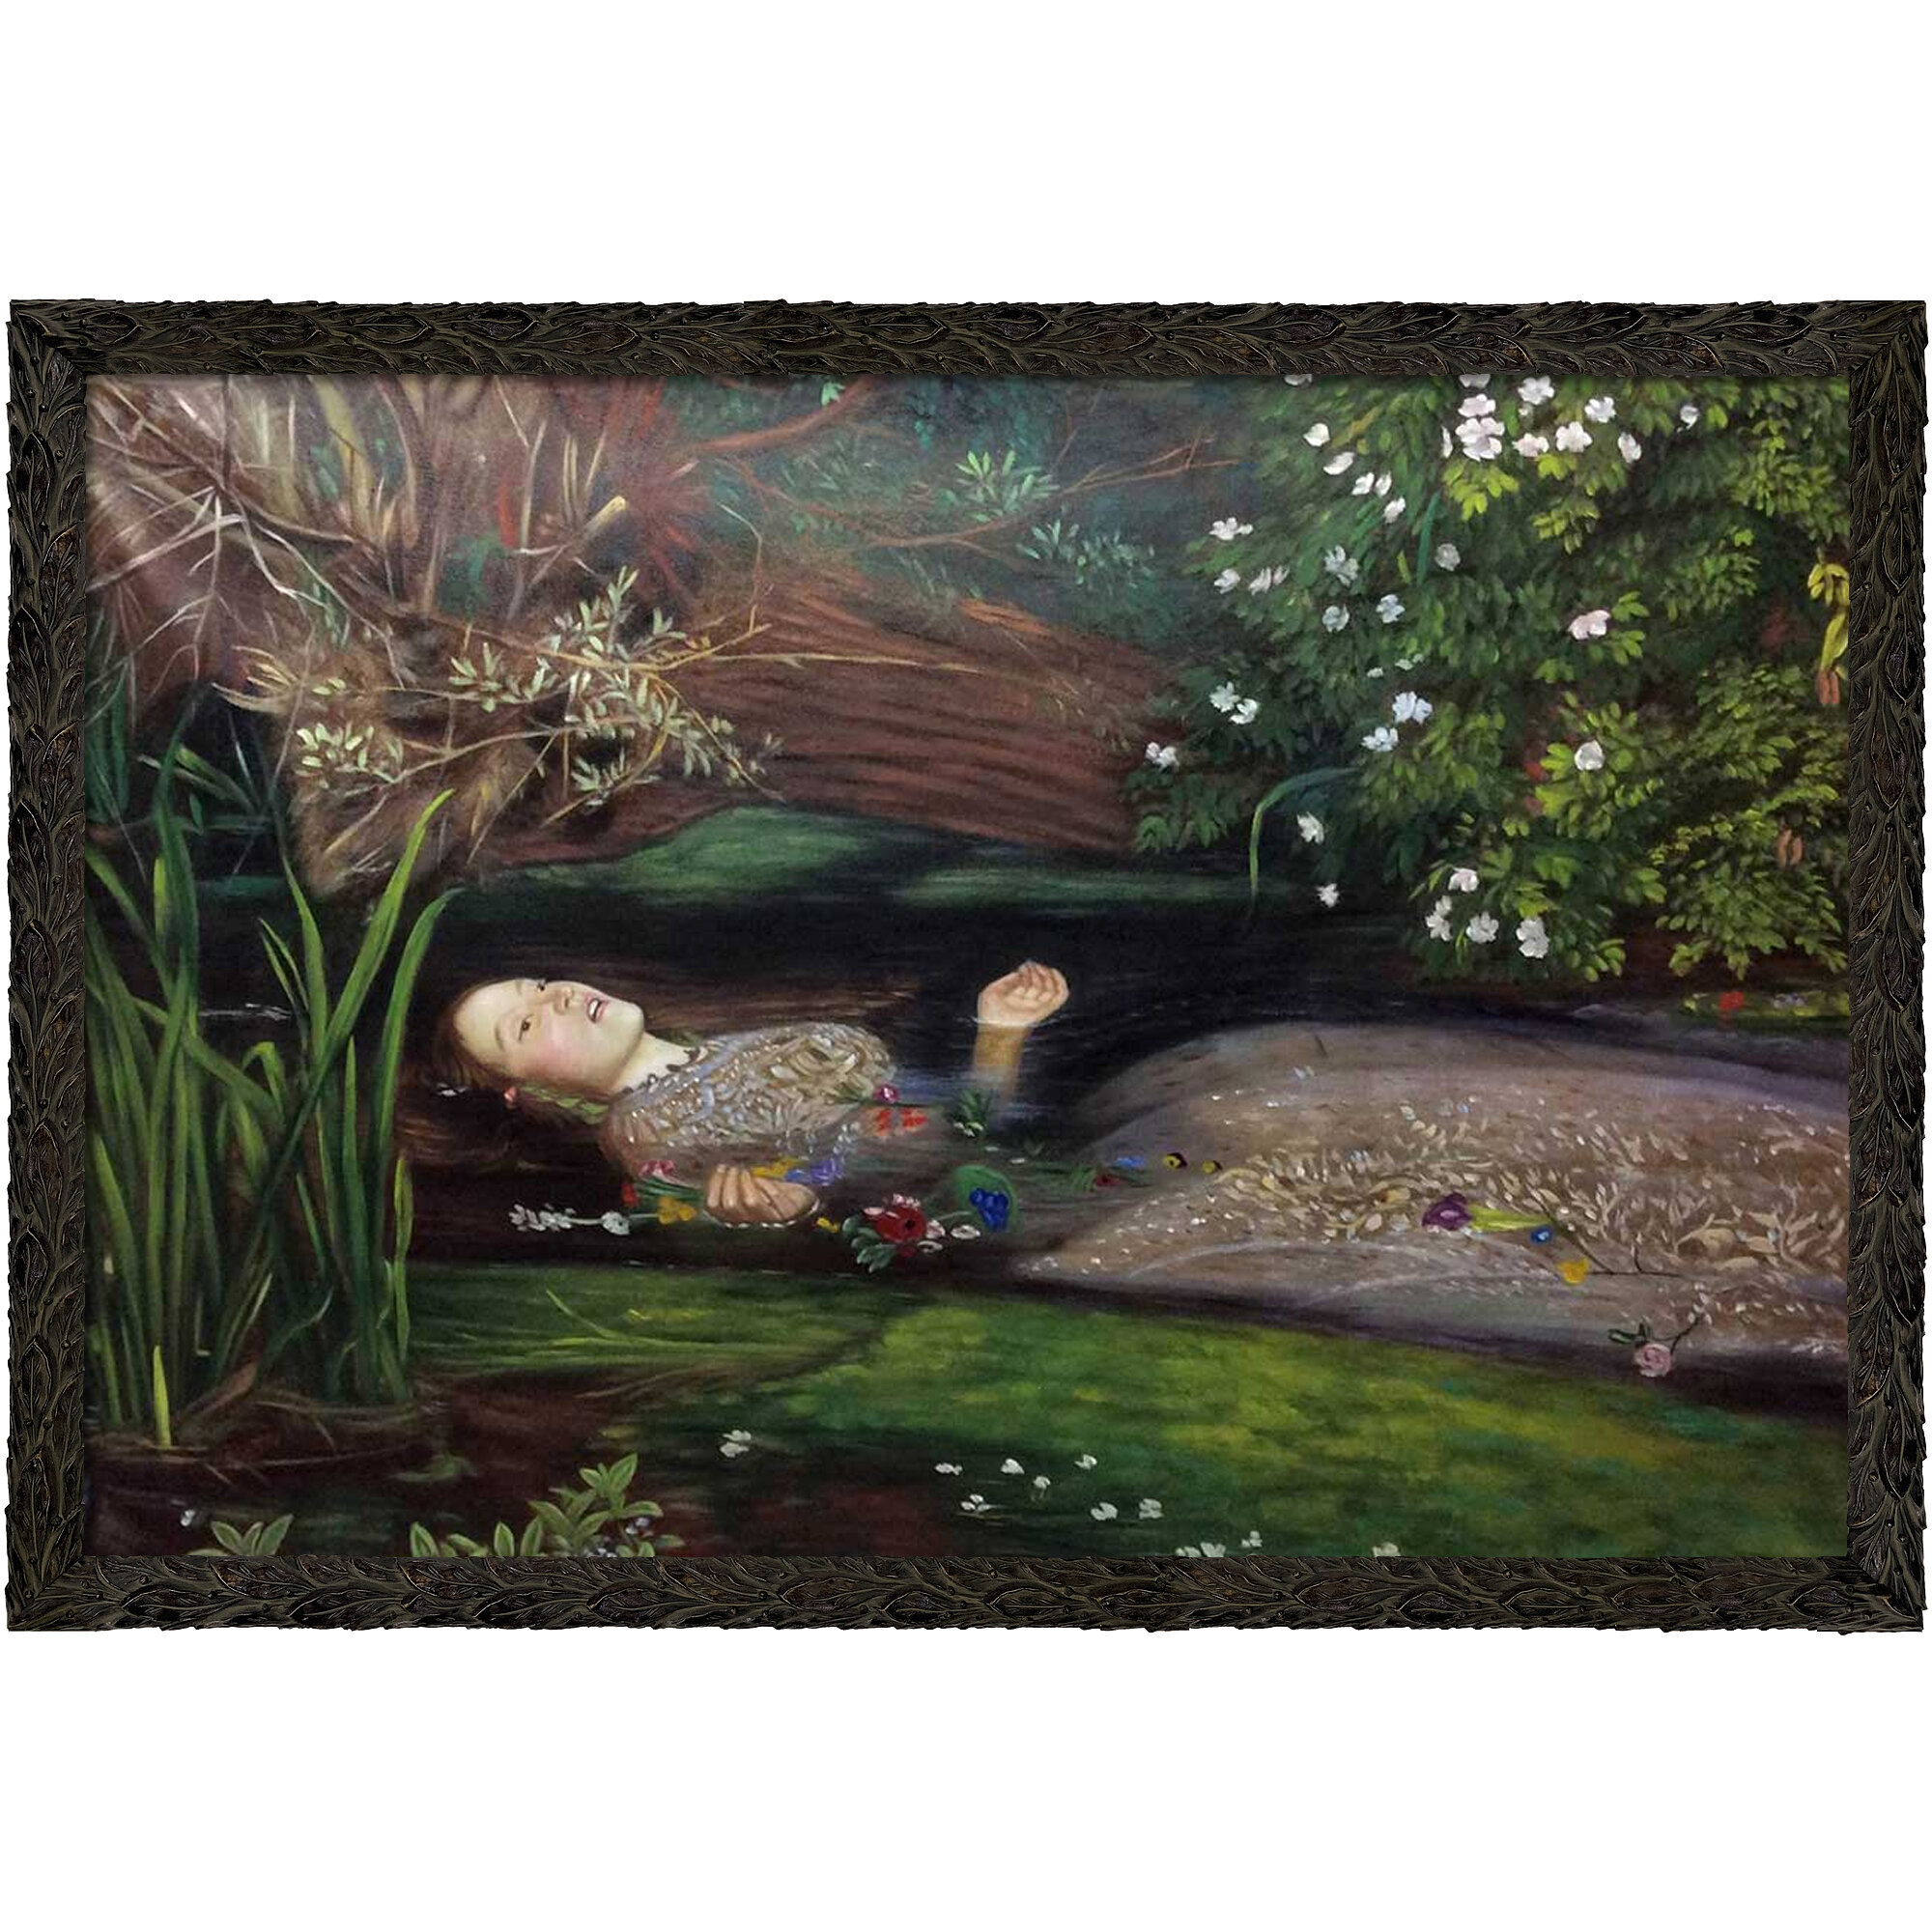 Overstock Art Ophelia By Sir John Everett Millais Painting On Canvas Wayfair